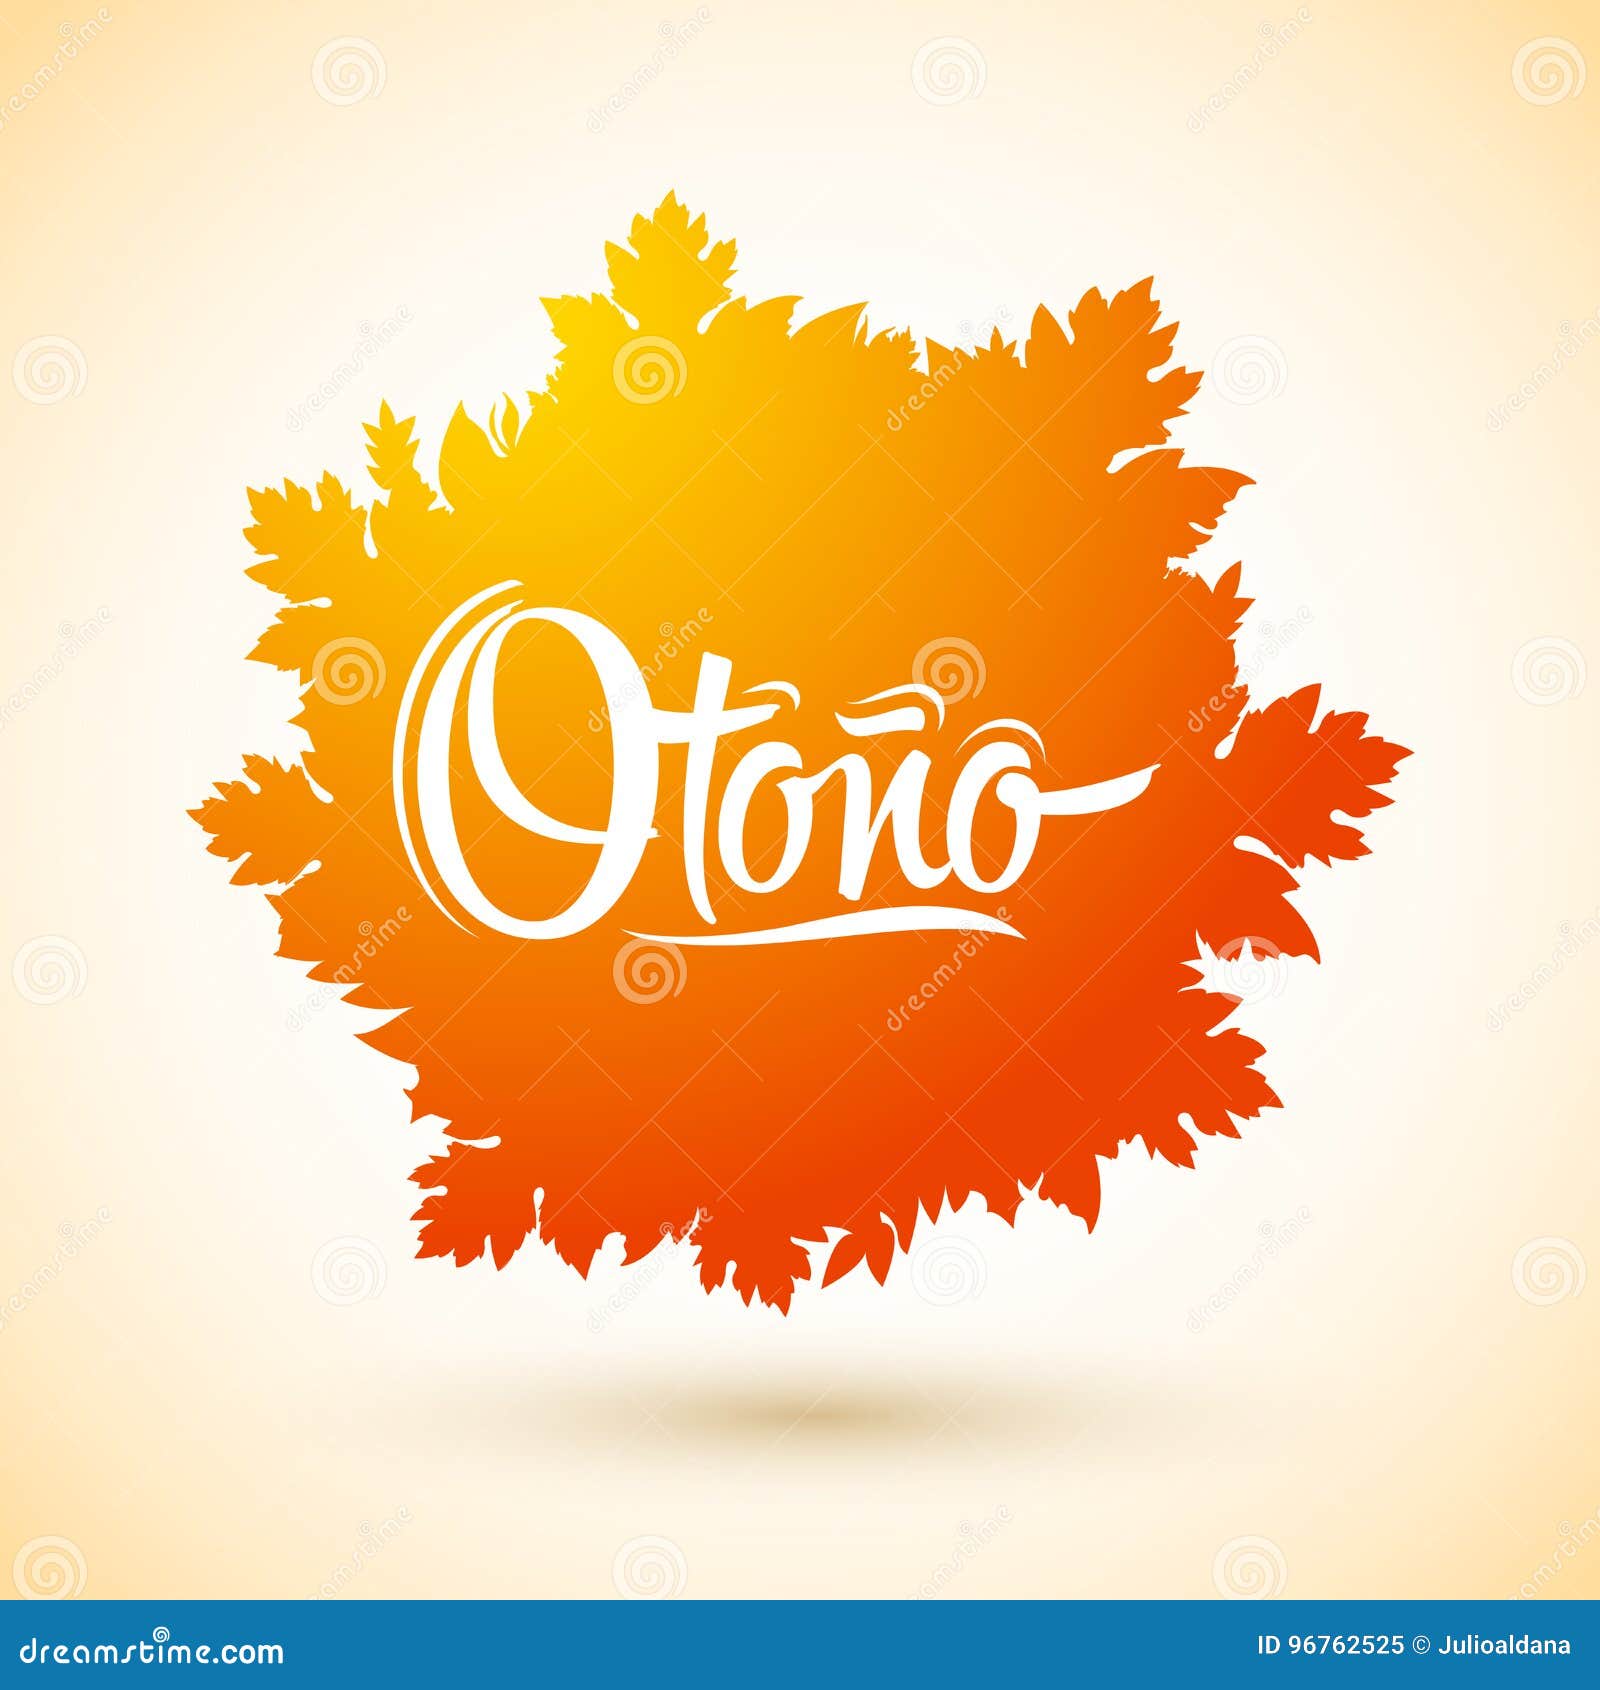 otono, autumn spanish text